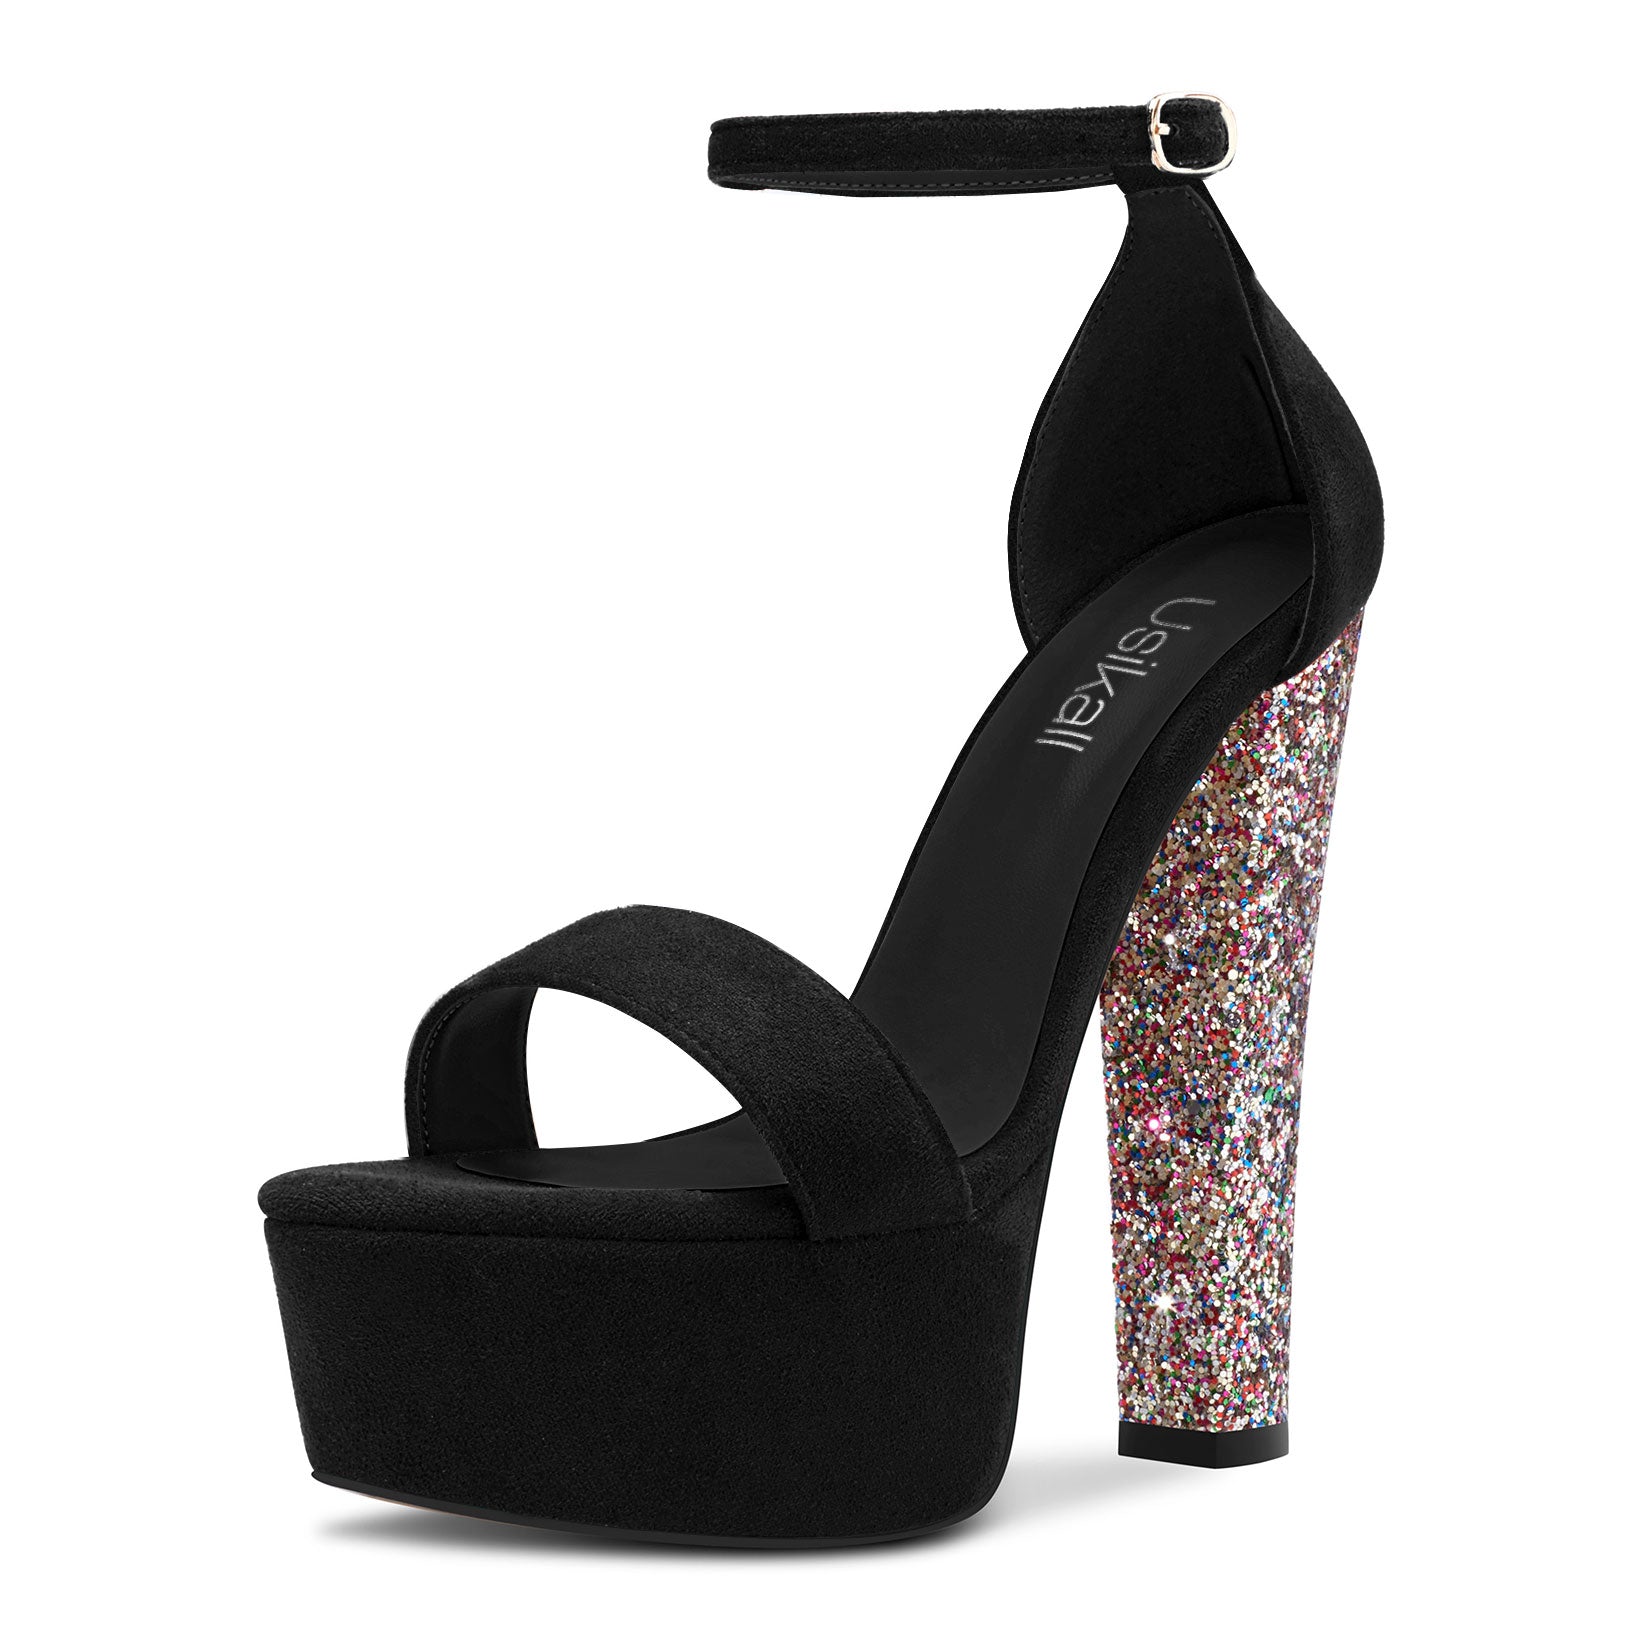 High heel shoes - Women's sizes 6-11 - Rhinestone platform 6 inch stiletto  heel - Black suede sandal and straps | Enjoyables By JR